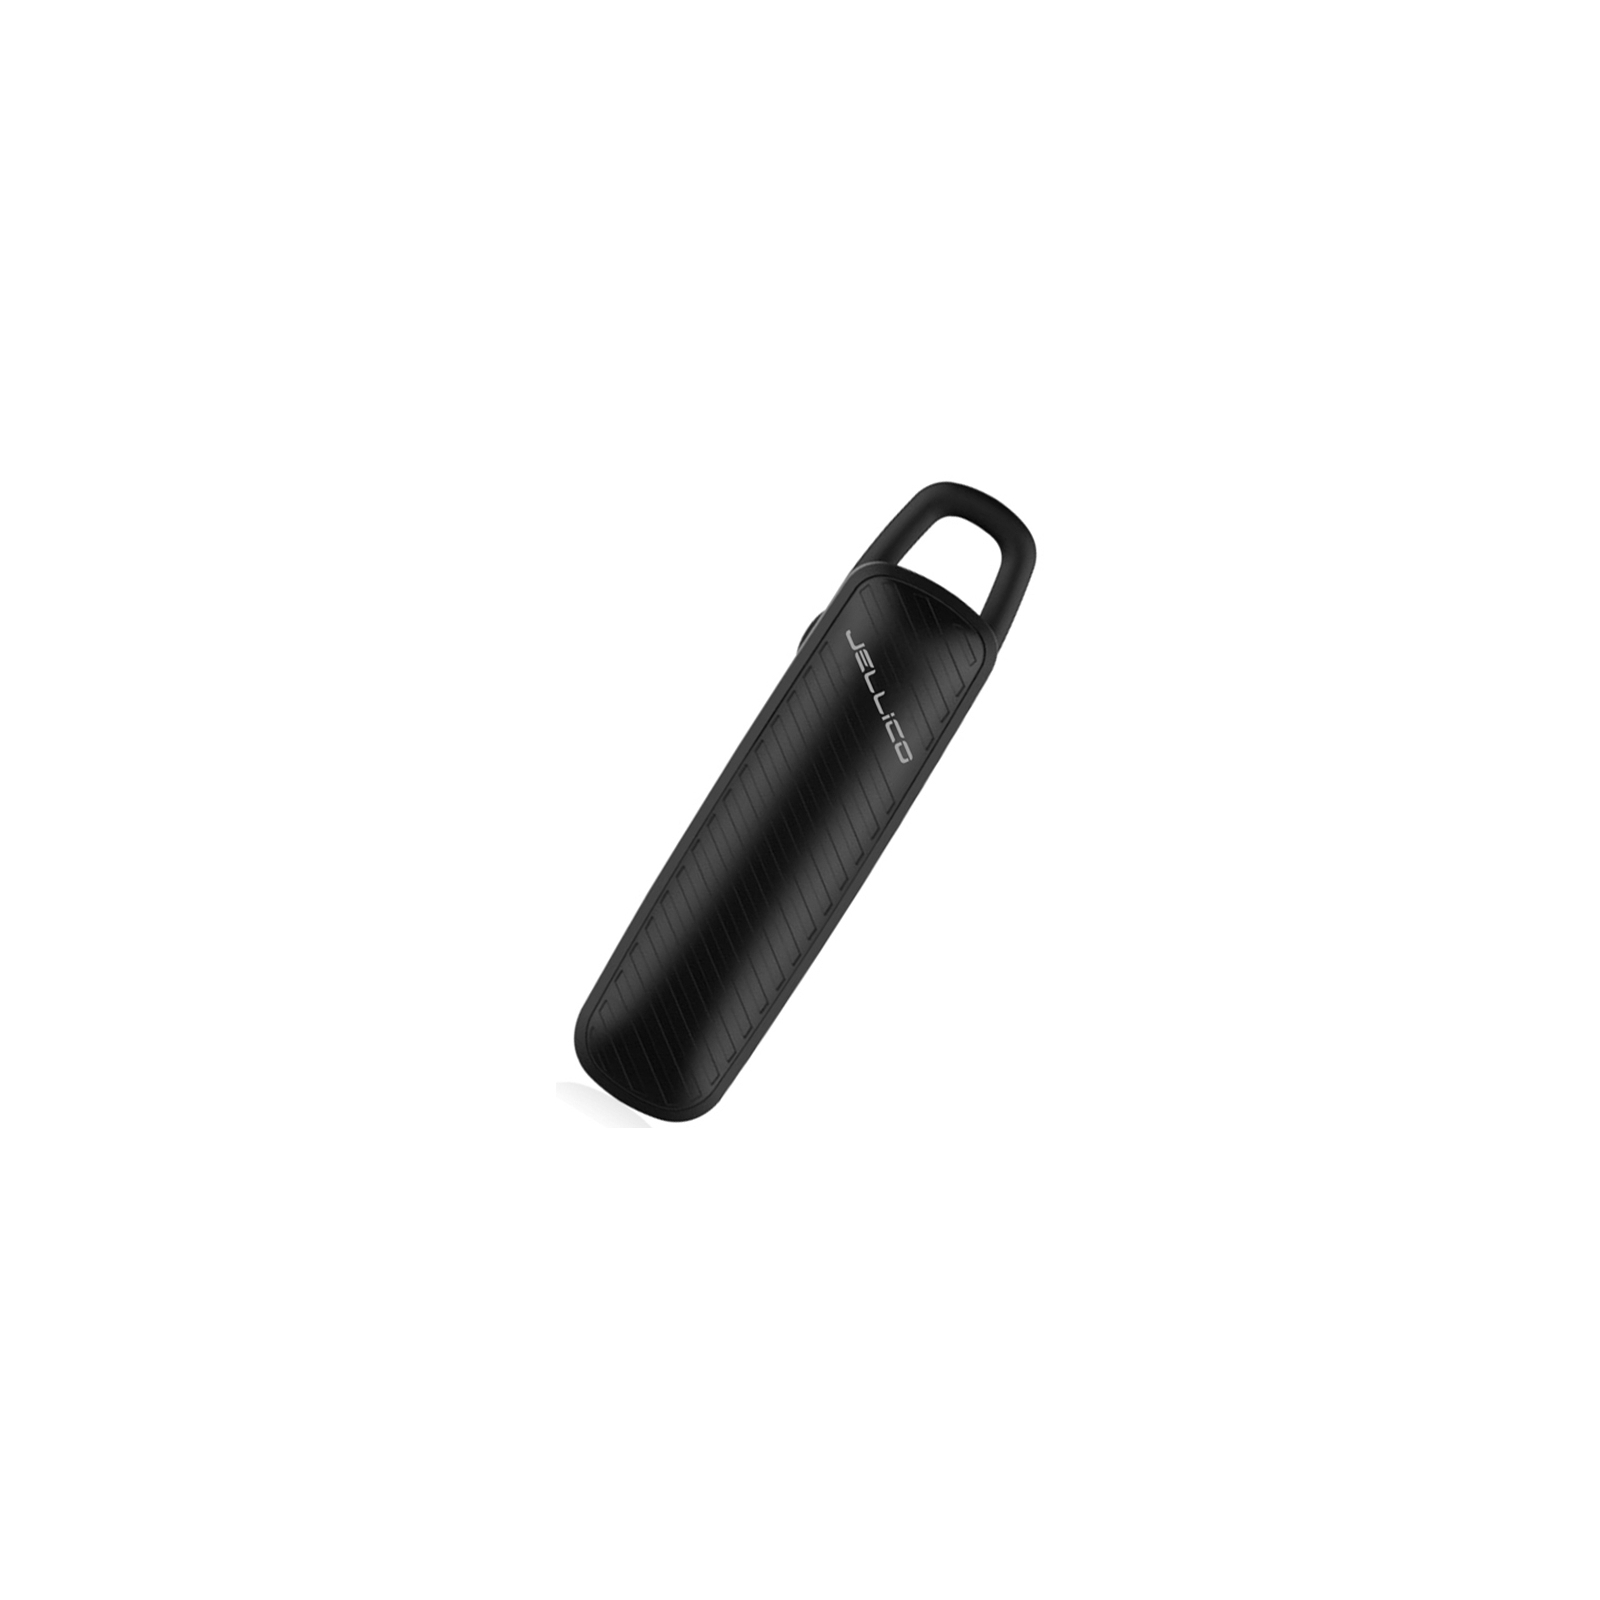 Bluetooth-гарнитура Jellico S200 Black (RL050511) изображение 2